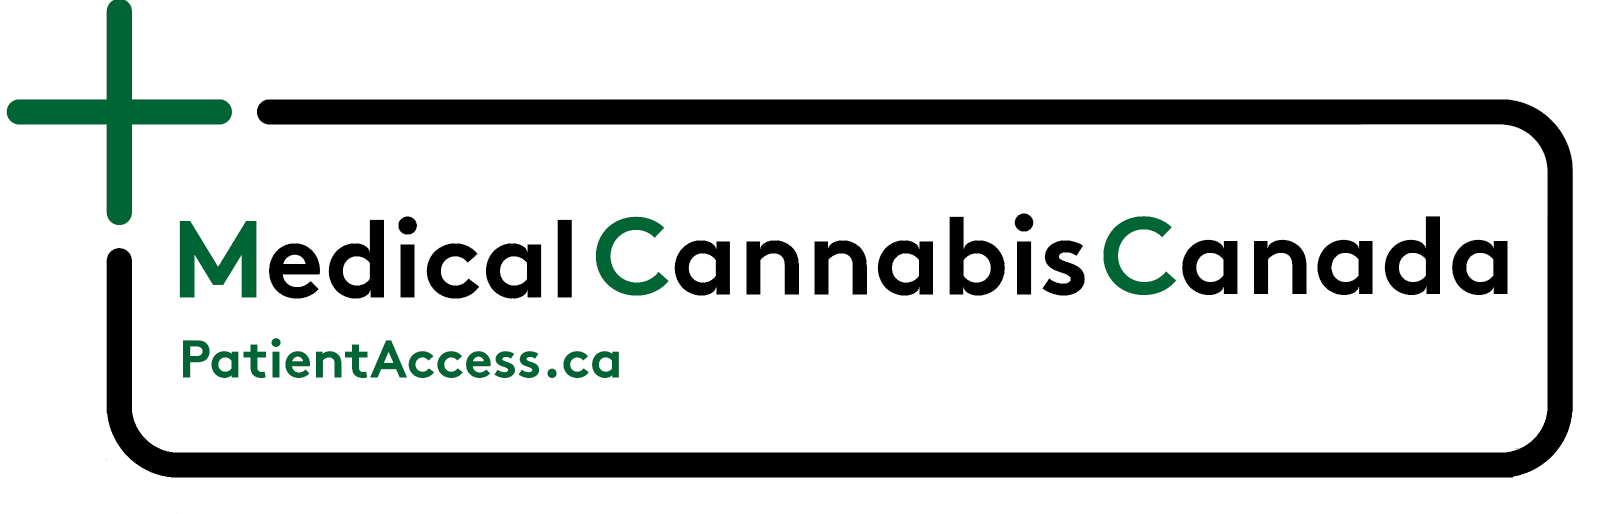 Medical Cannabis Canada - Cananbis Médicale Canada